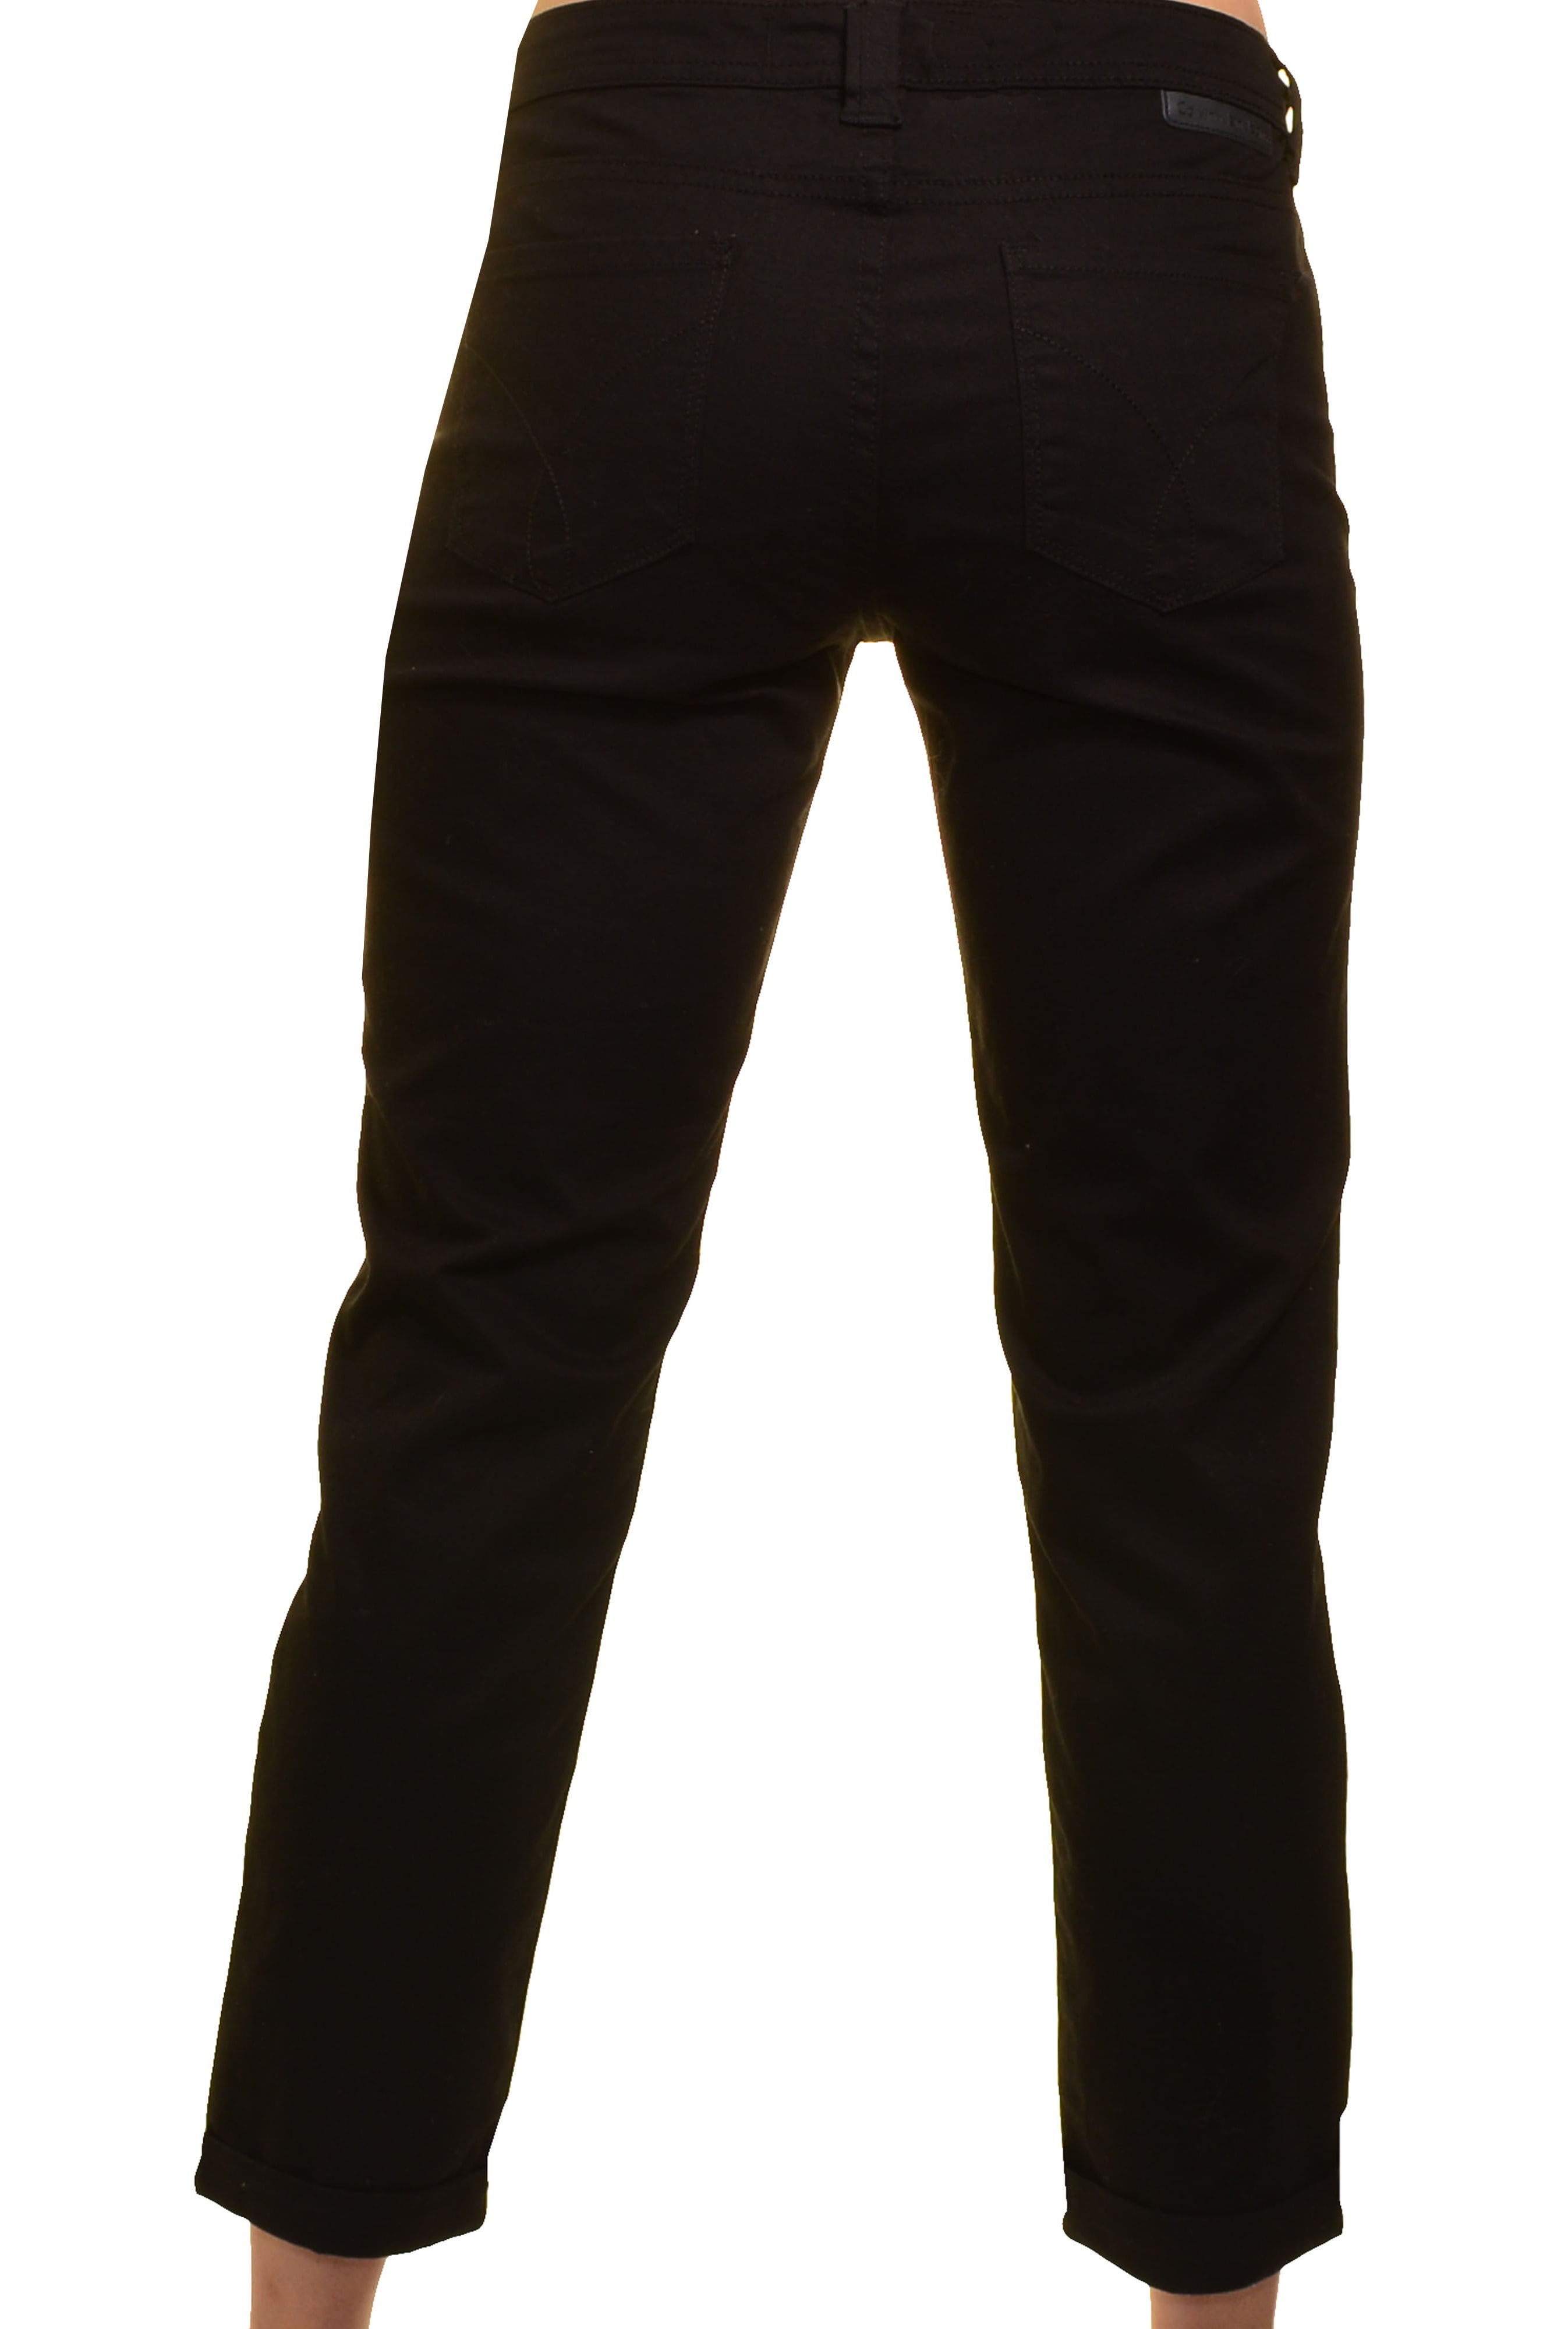 calvin klein jeans power stretch skinny crop pants (mountain air